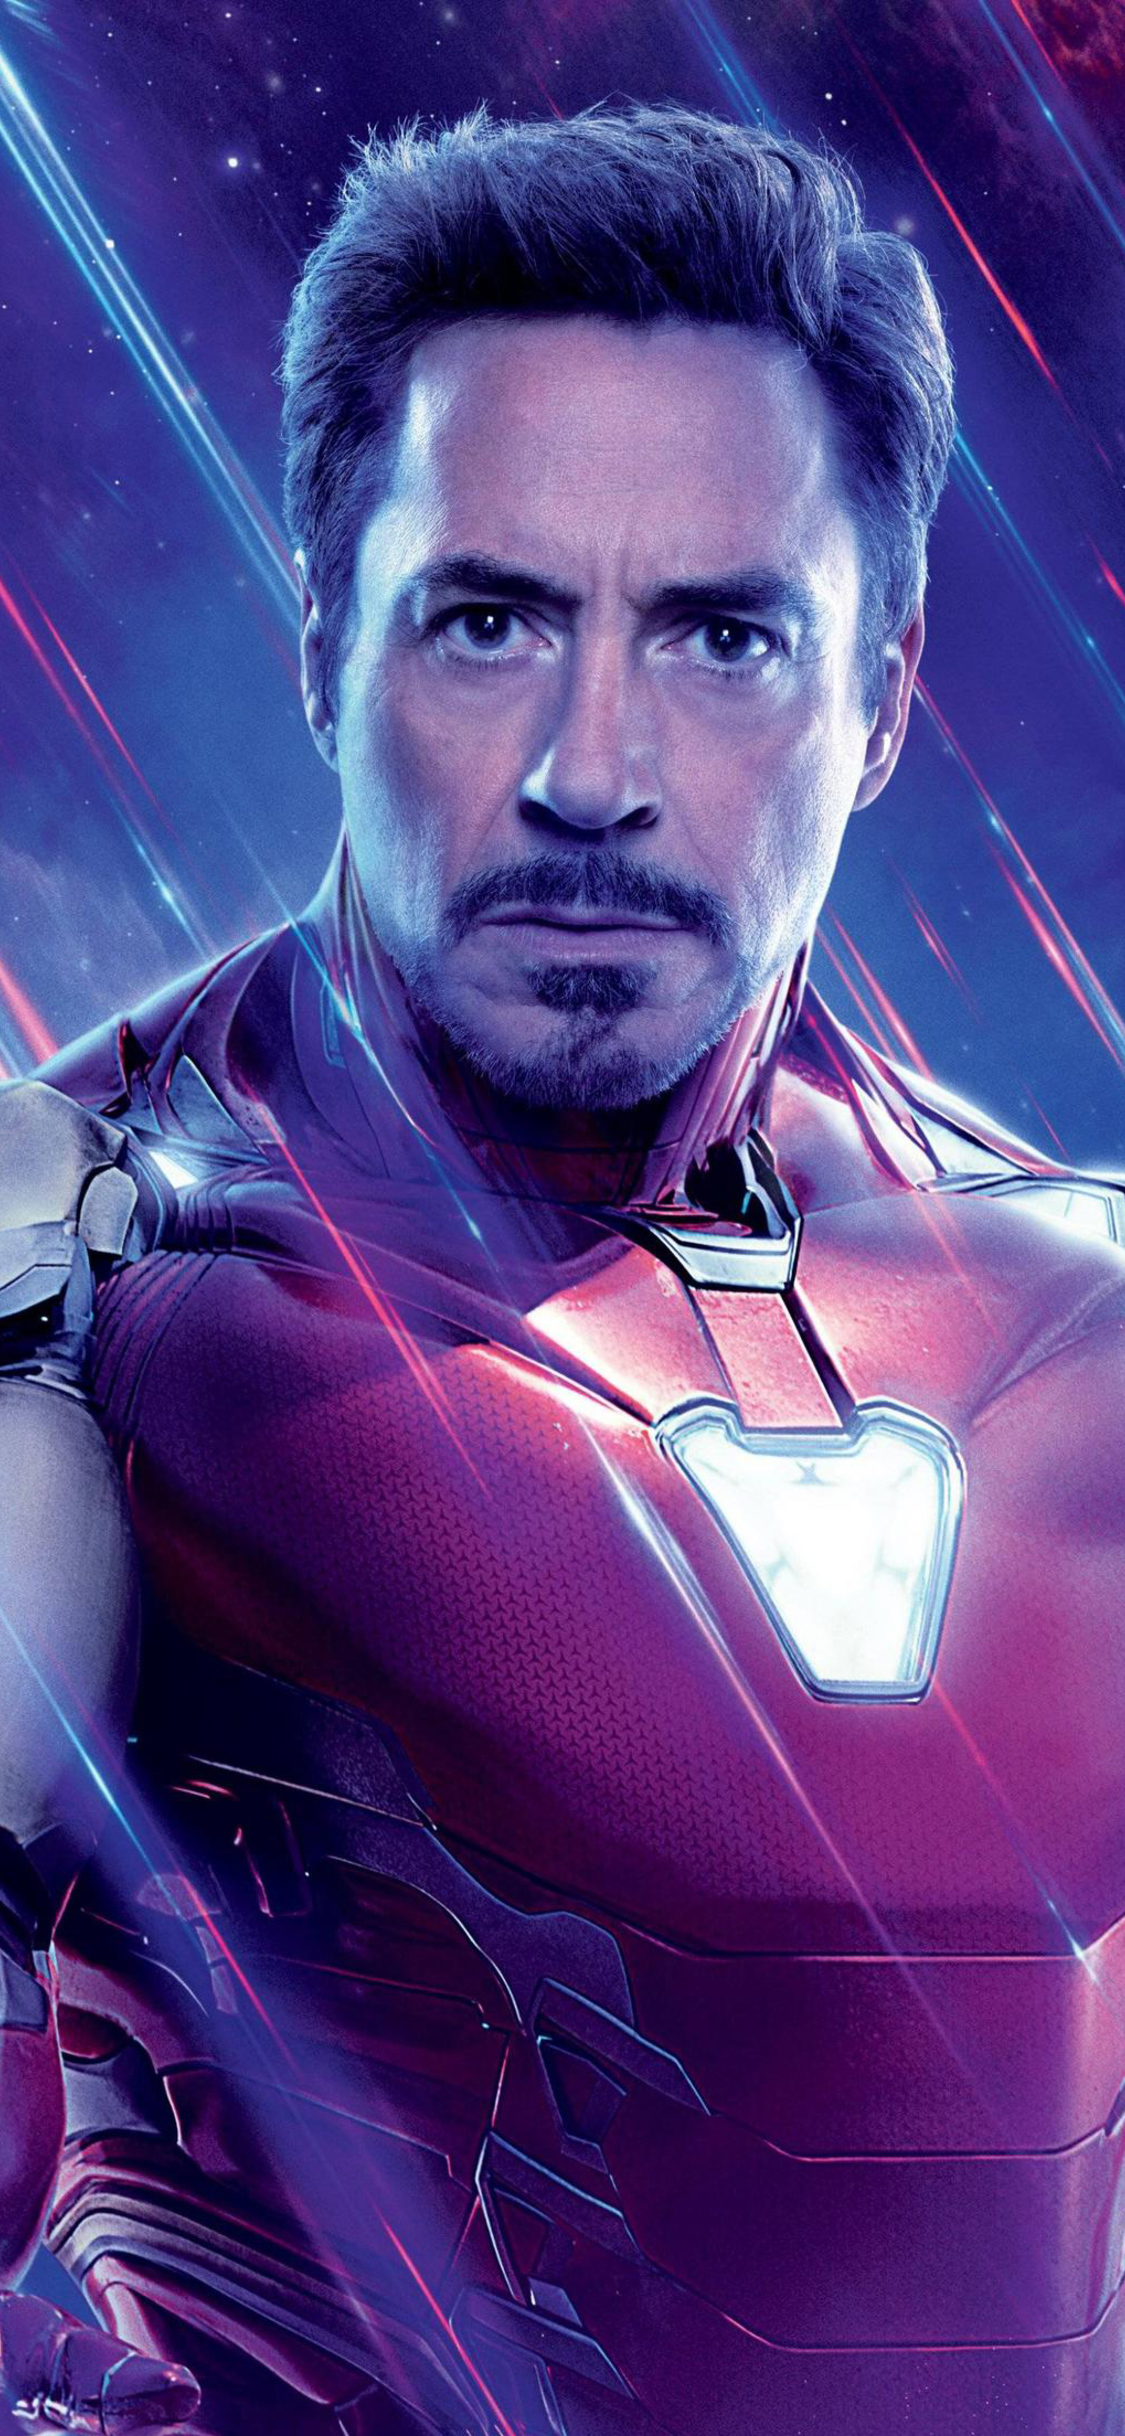 Iron Man In Avengers Endgame 2019 iPhone XS, iPhone 10